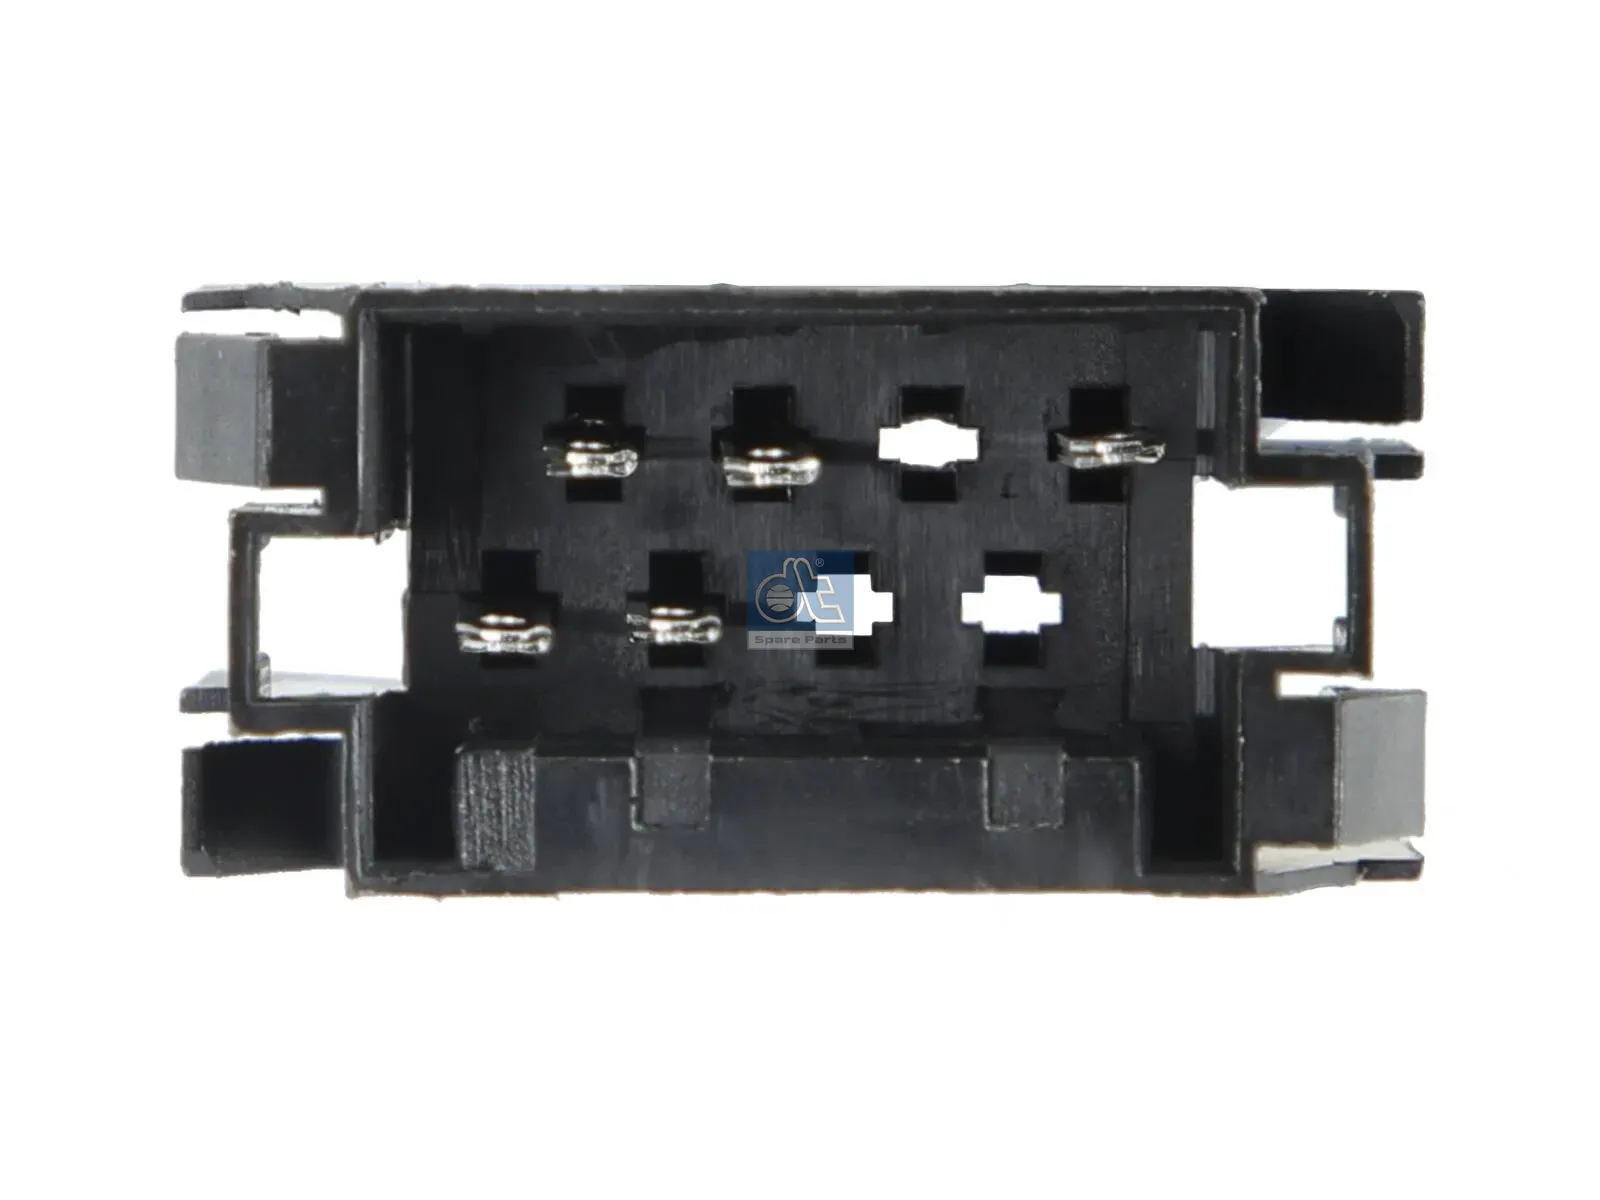 Sensor, accelerator pedal, black connector